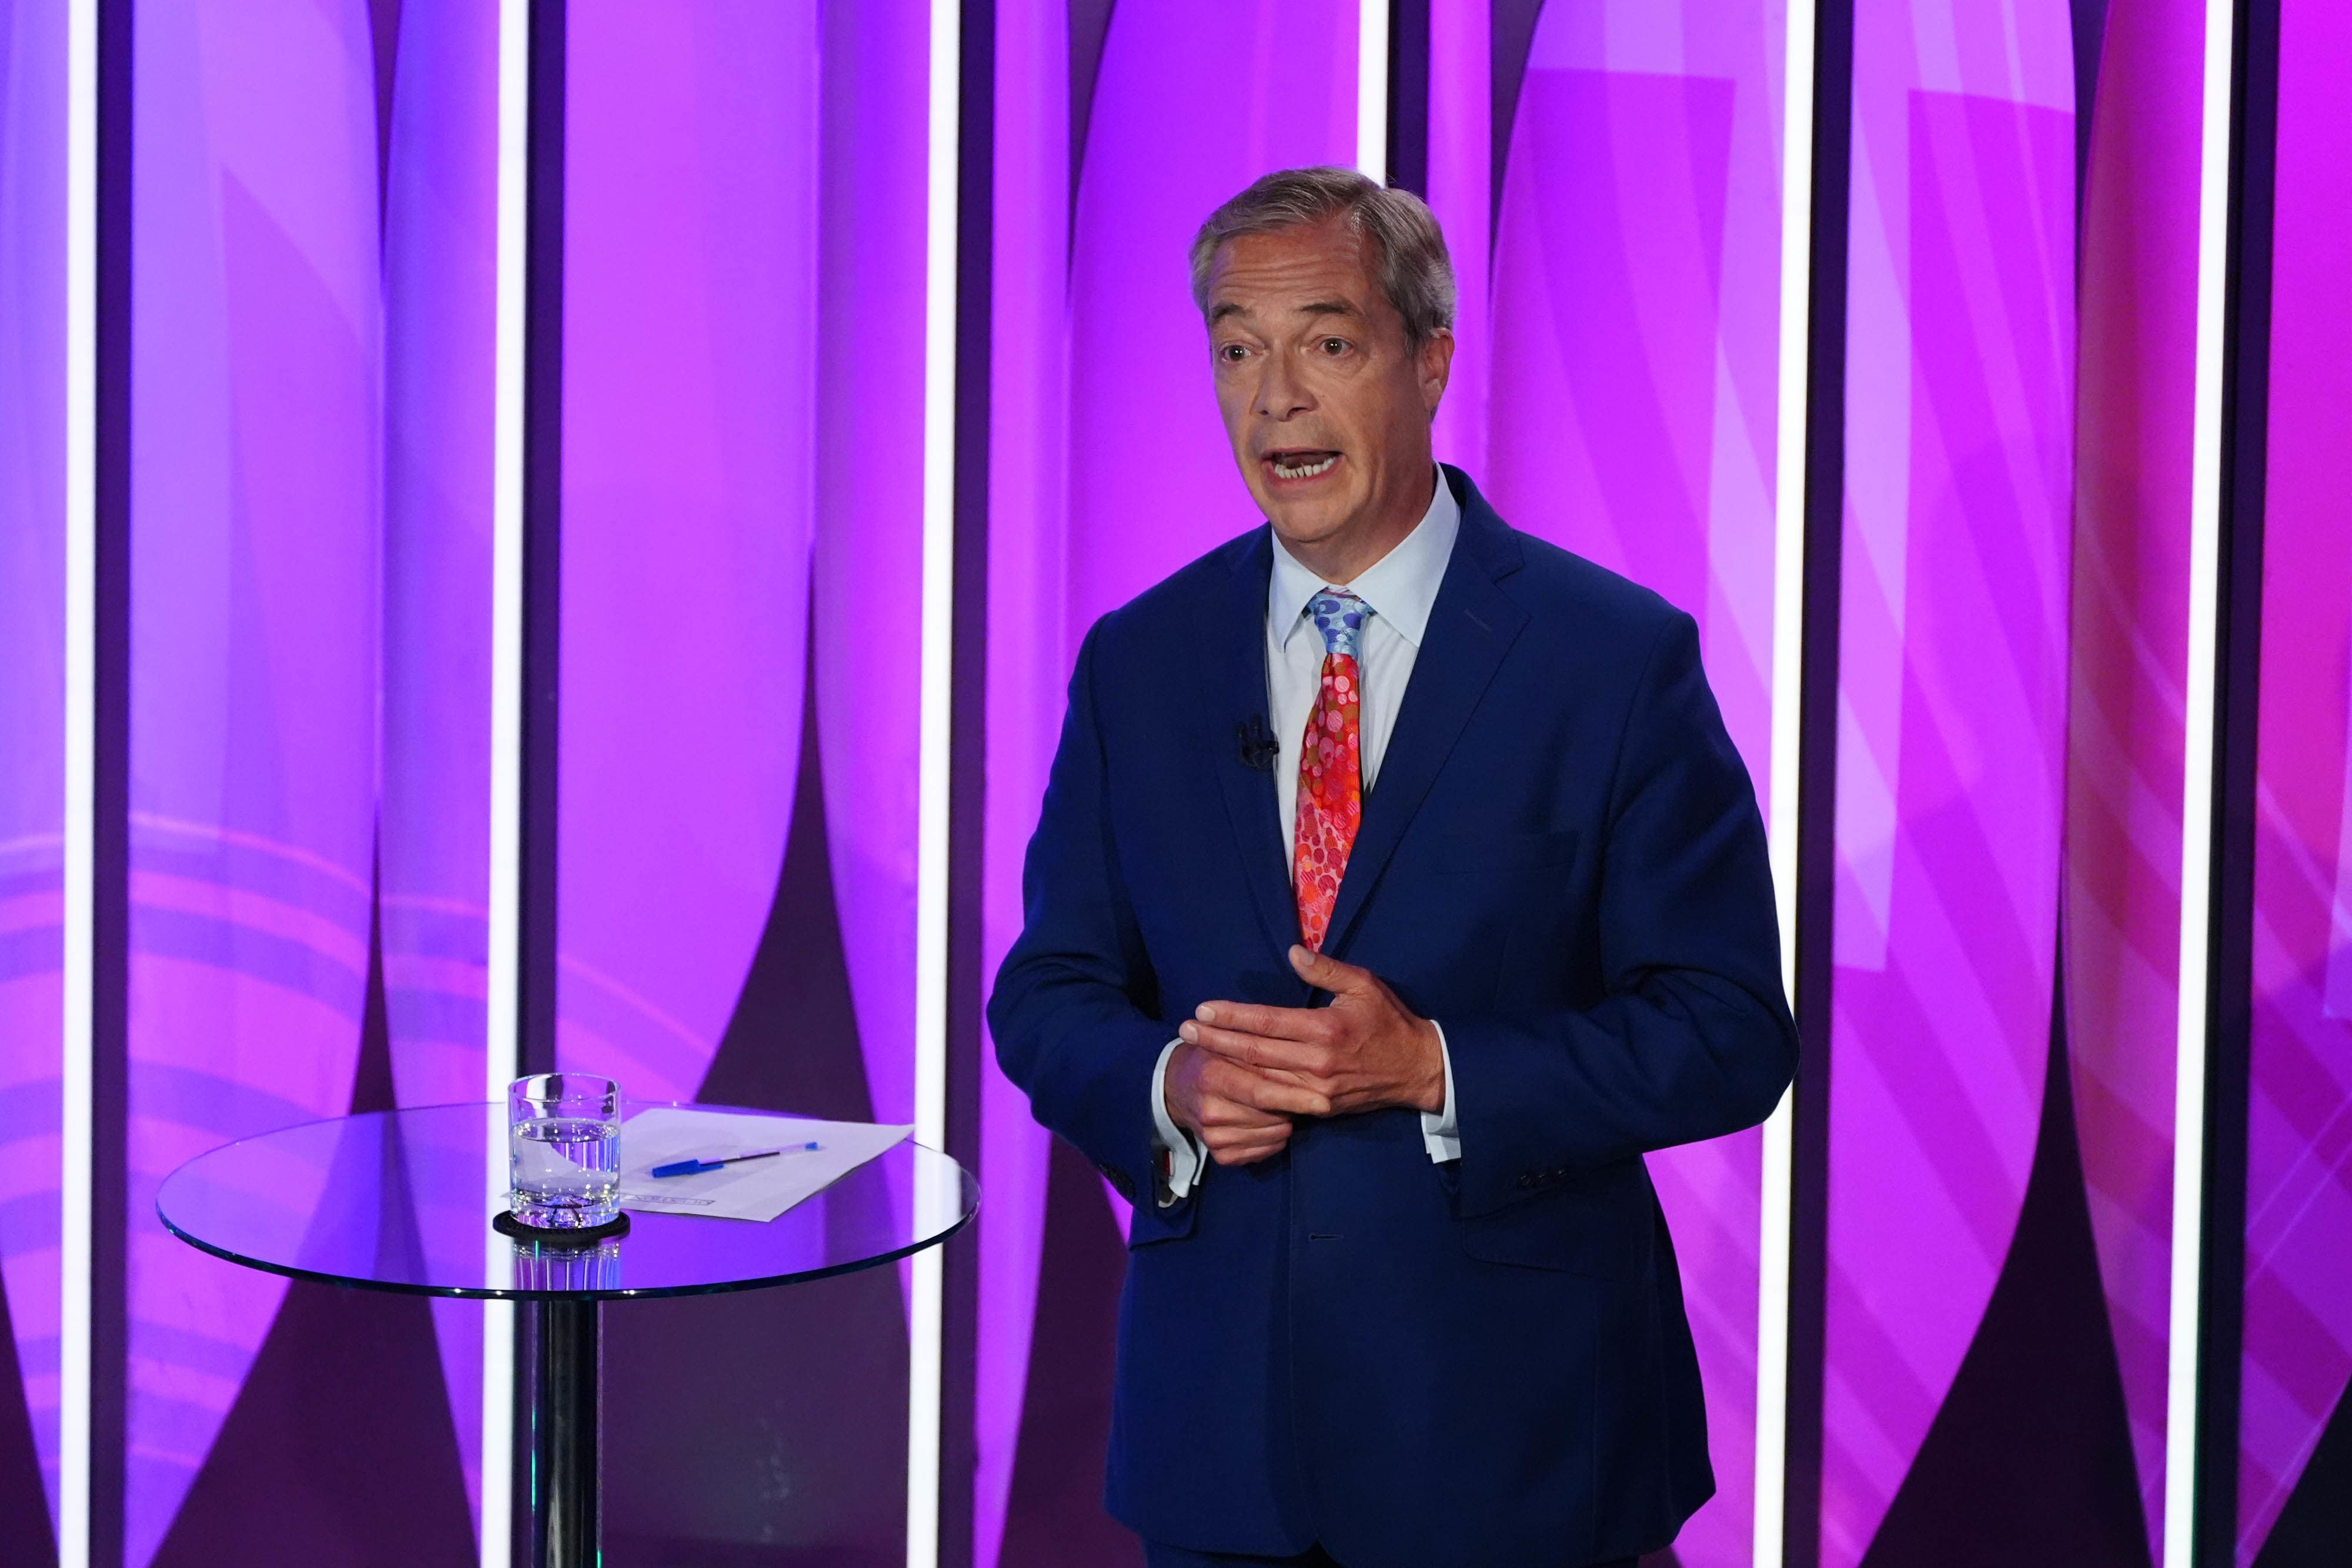 Reform UK Leader Nigel Farage refused to apologise (PA)